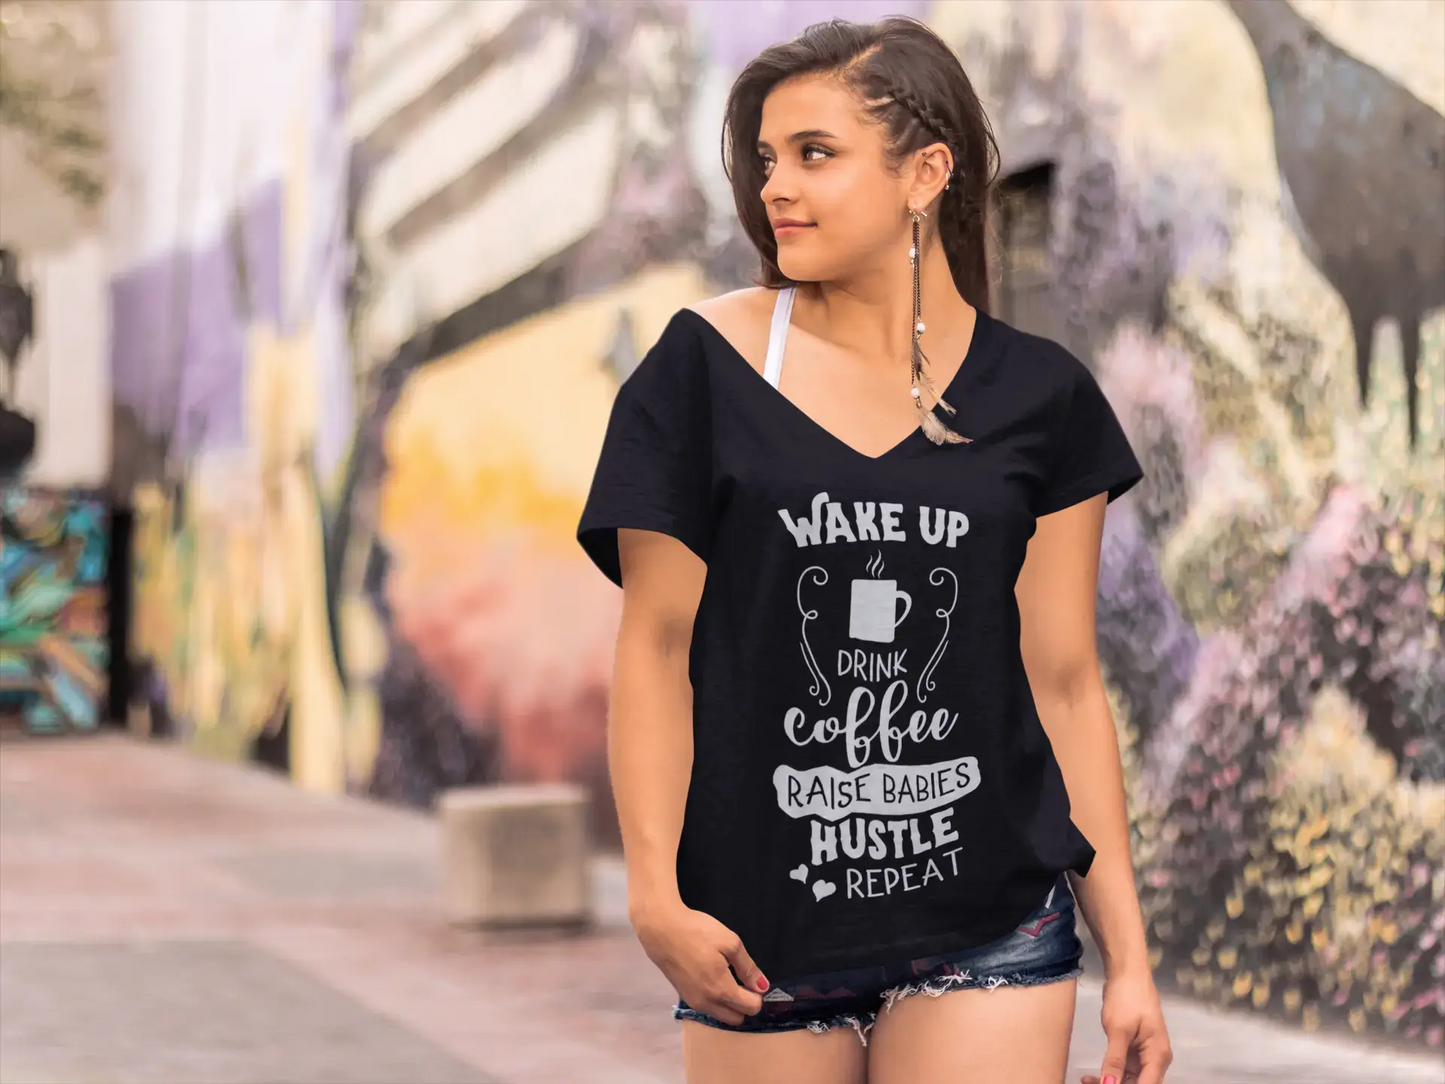 ULTRABASIC Women's T-Shirt Wake Up Drink Coffee Raise Babies Hustle Repeat Tee Shirt